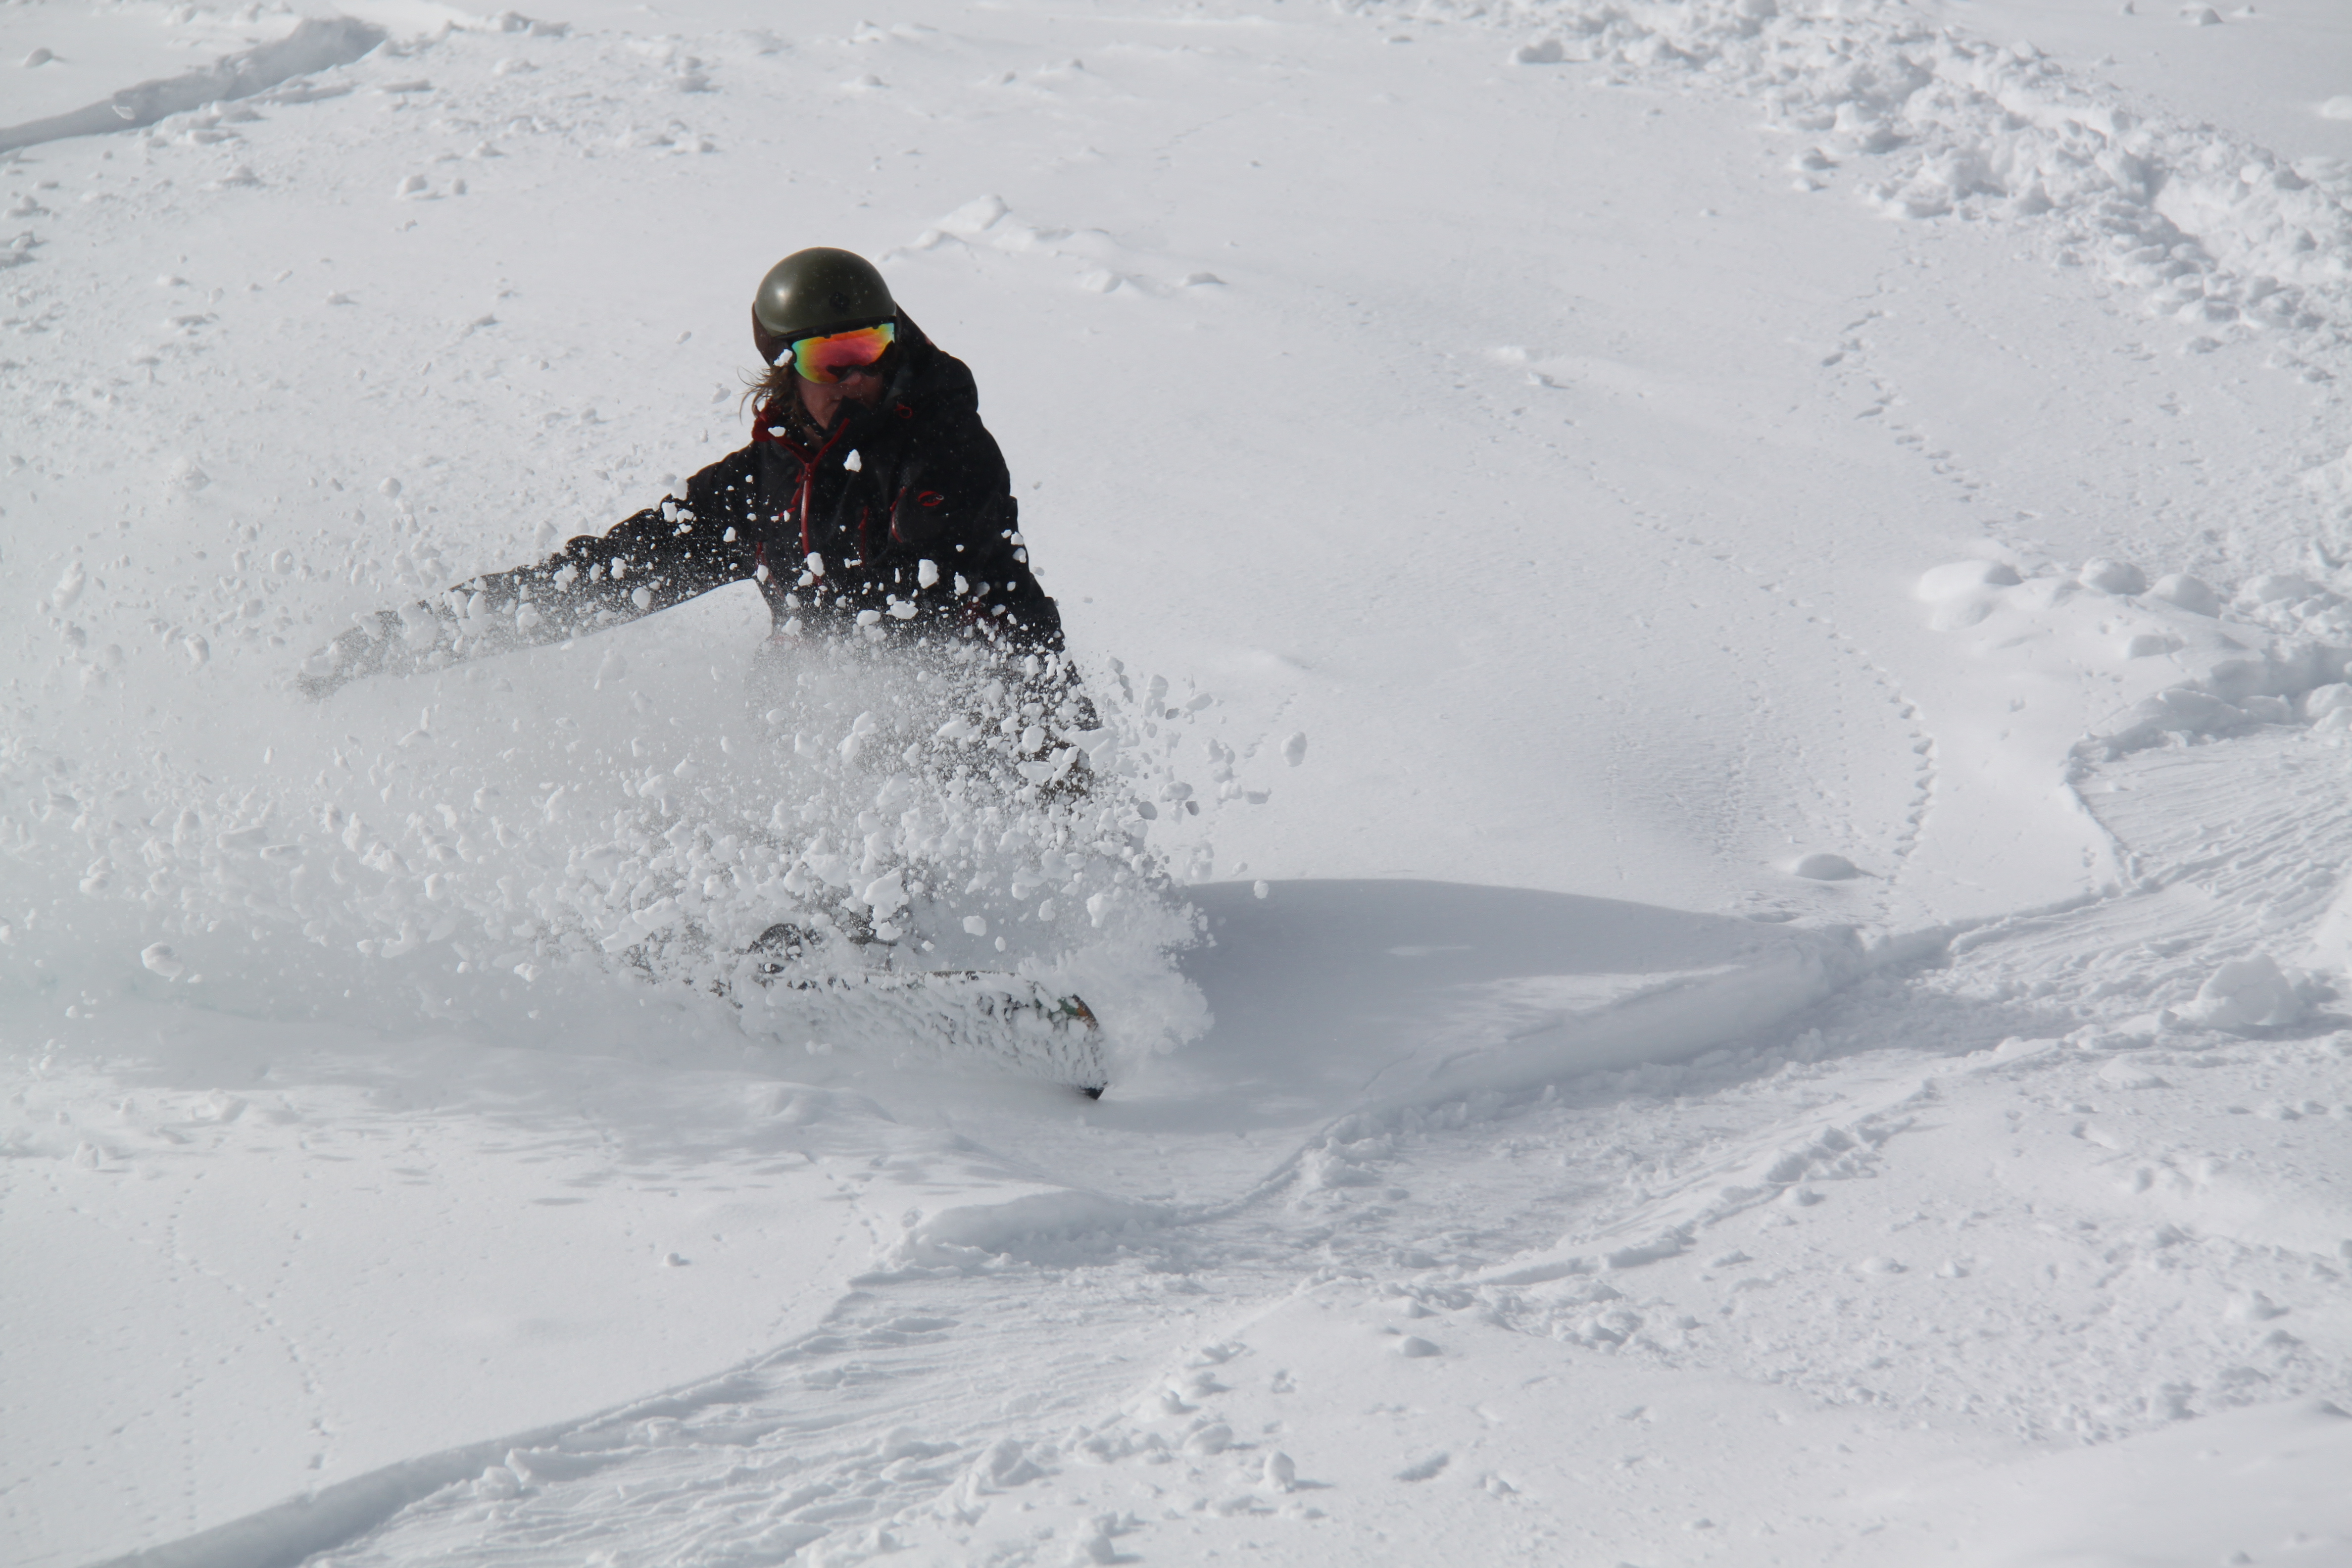 Snowboarder enjoying the powder at Sunshine Village, Banff, Alberta.